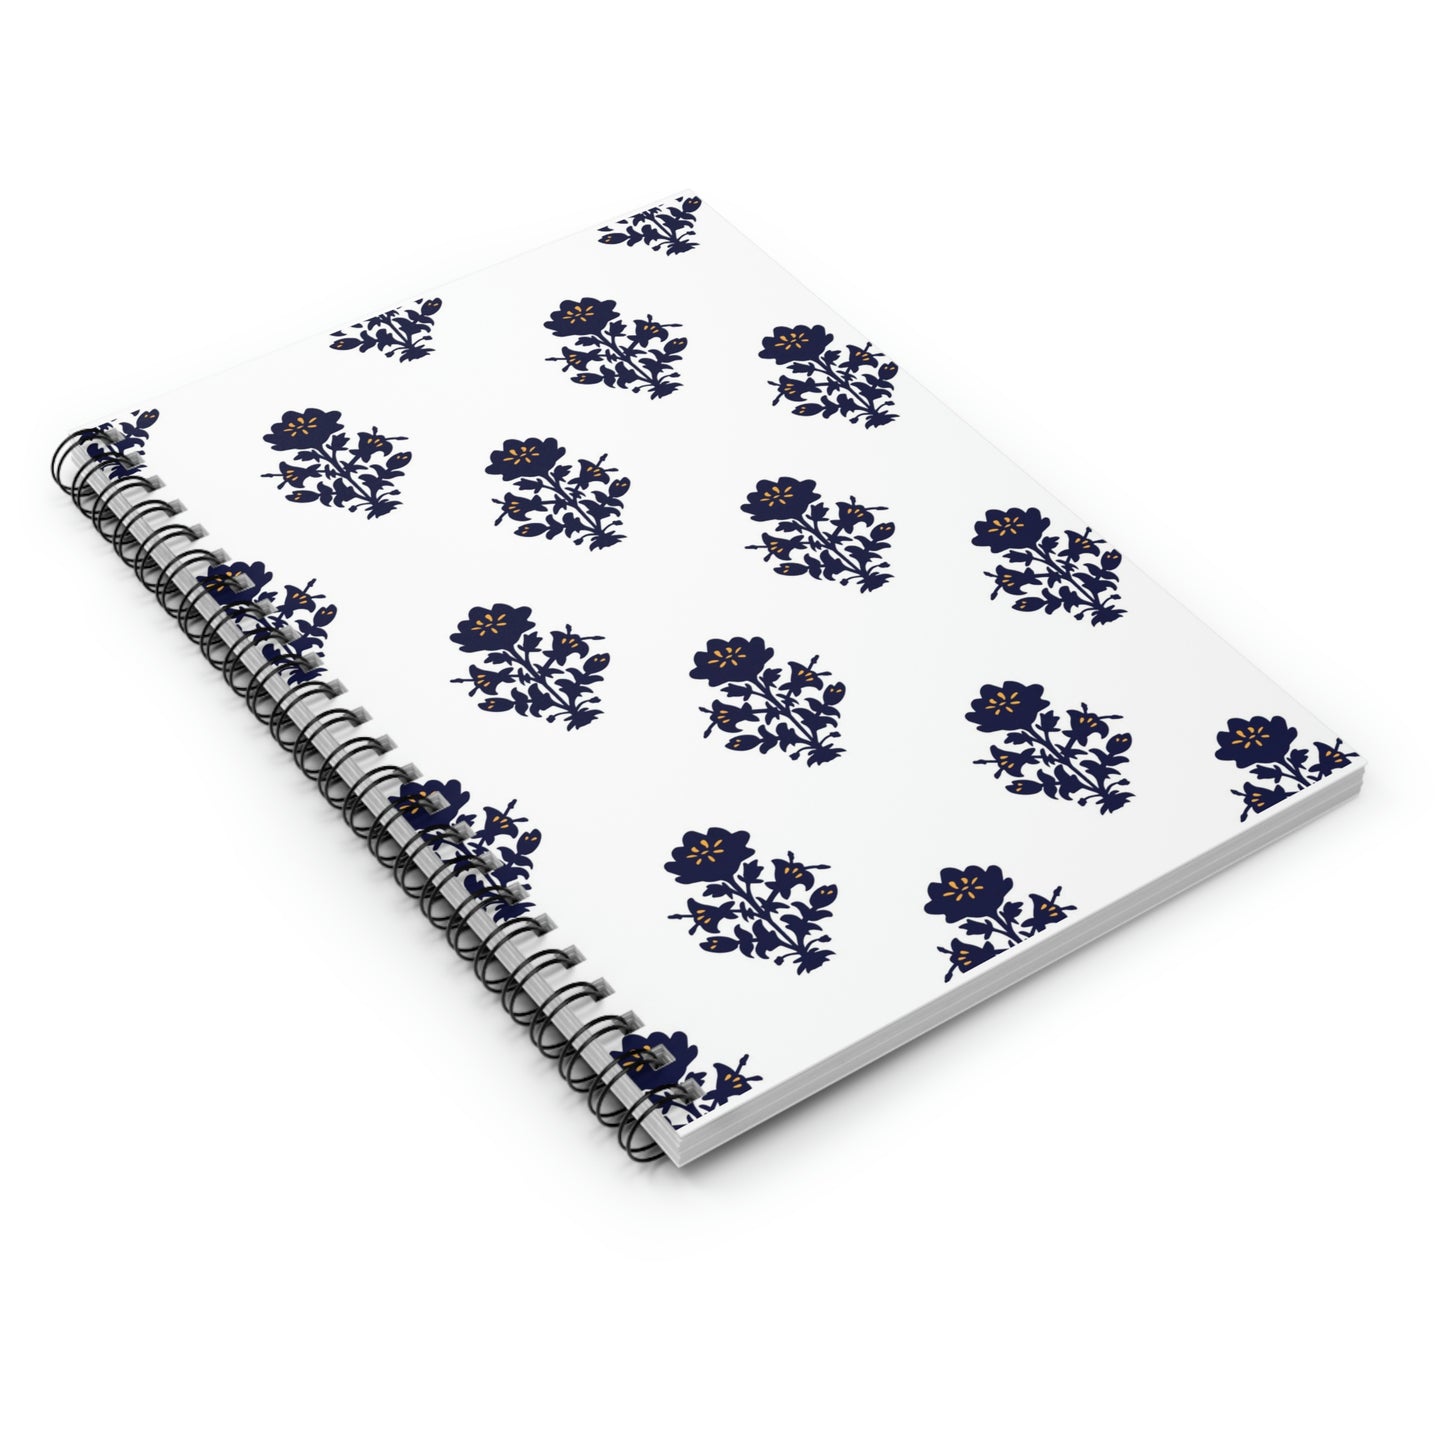 Blue Floral Spiral Notebook - Ruled Line, Indian Block Print